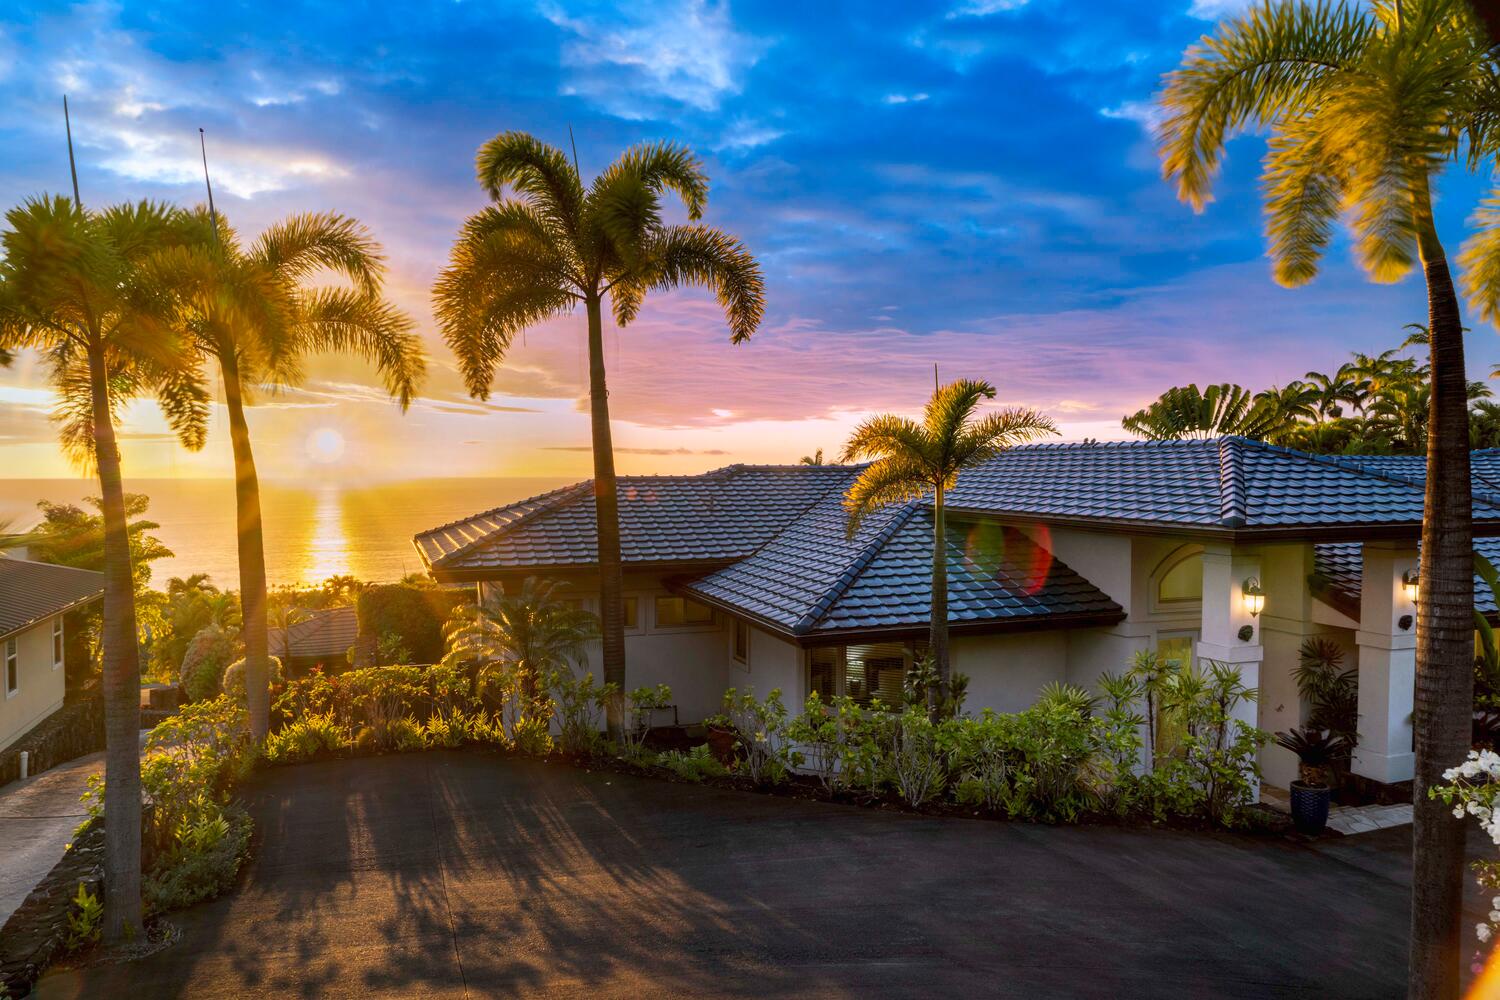 Kailua Kona Vacation Rentals, Blue Hawaii - 